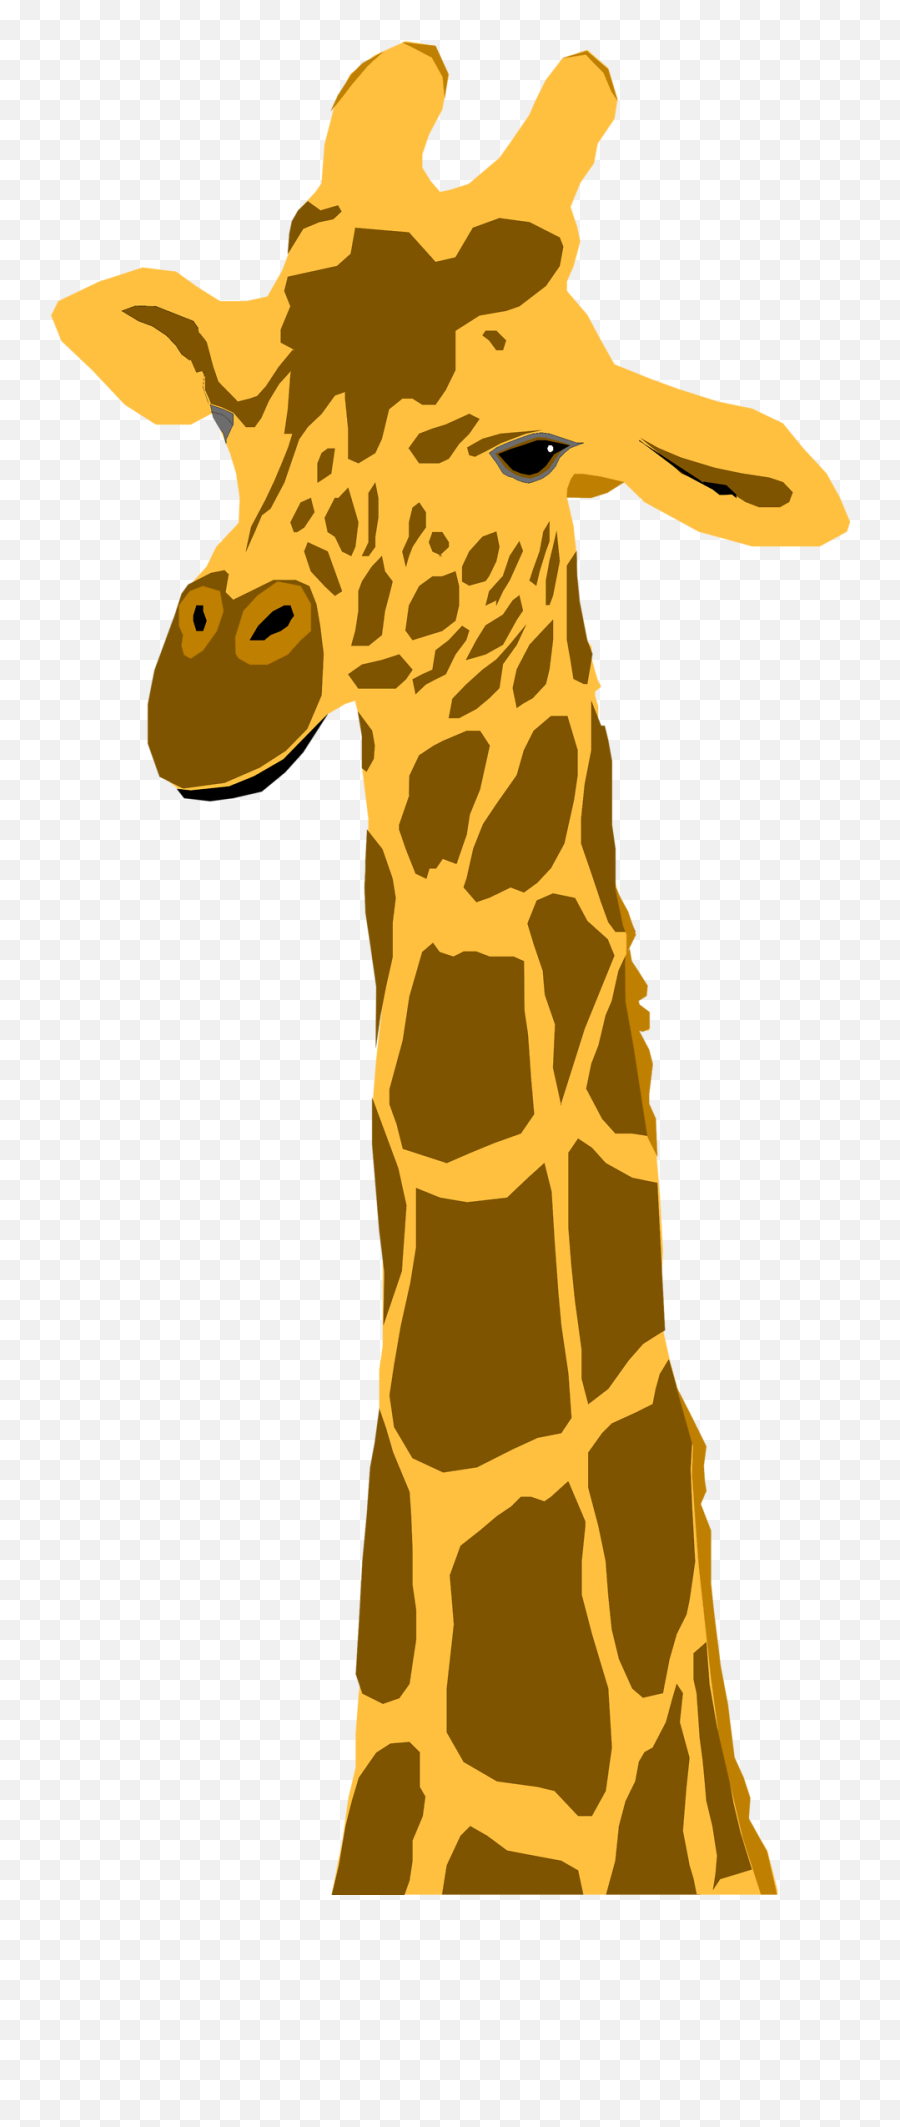 Giraffe Clipart Transparent Background - Giraffe Transparent Background Clipart Png,Giraffe Transparent Background